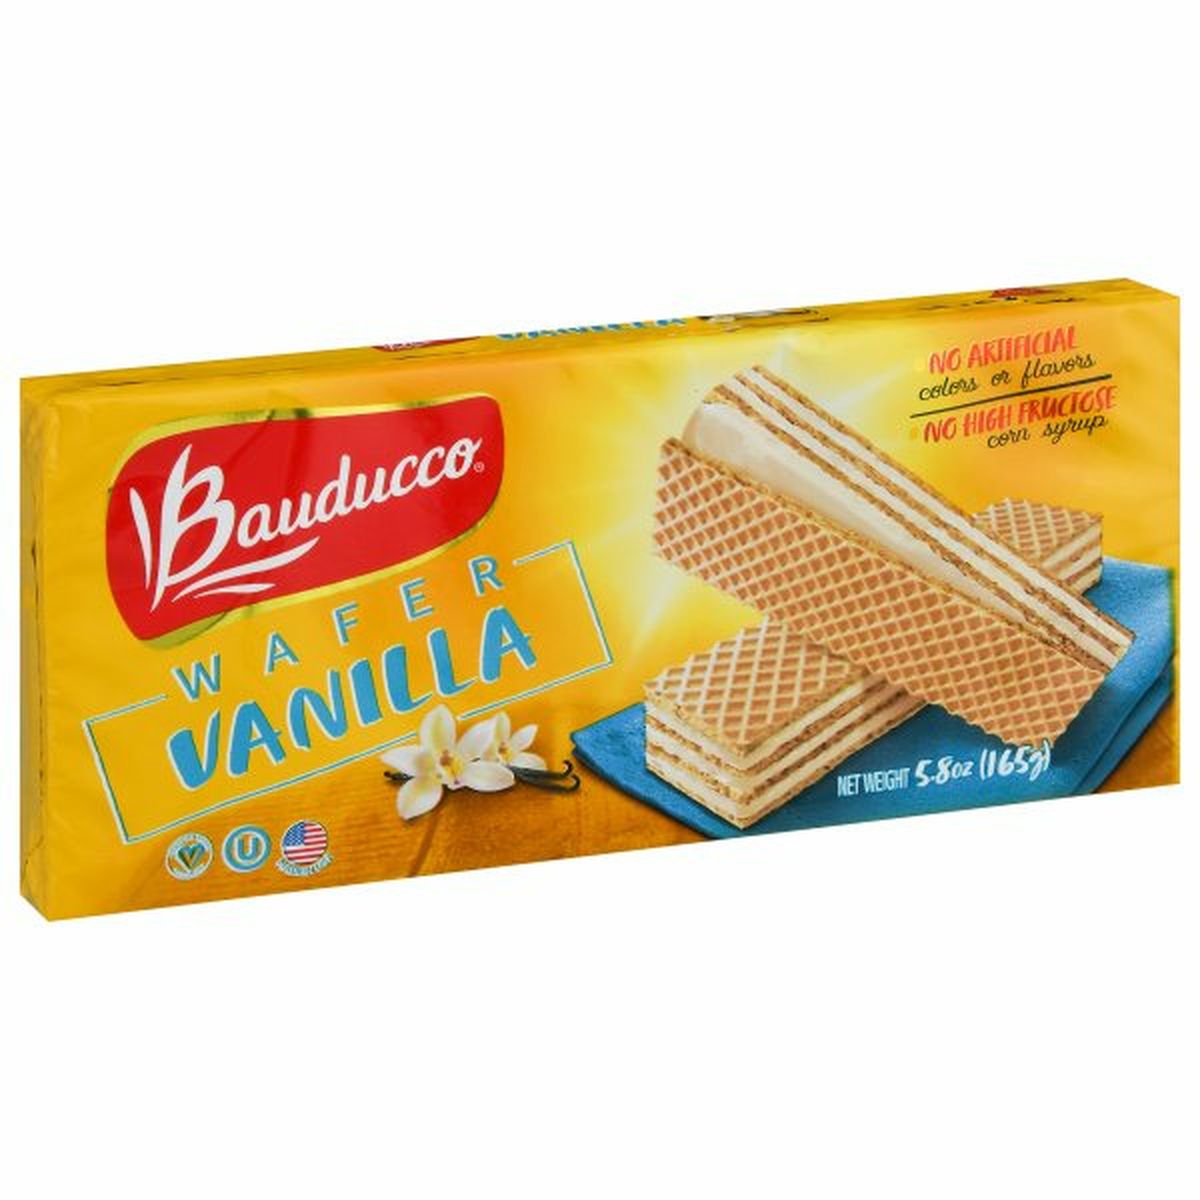 Calories in Bauducco Wafer, Vanilla